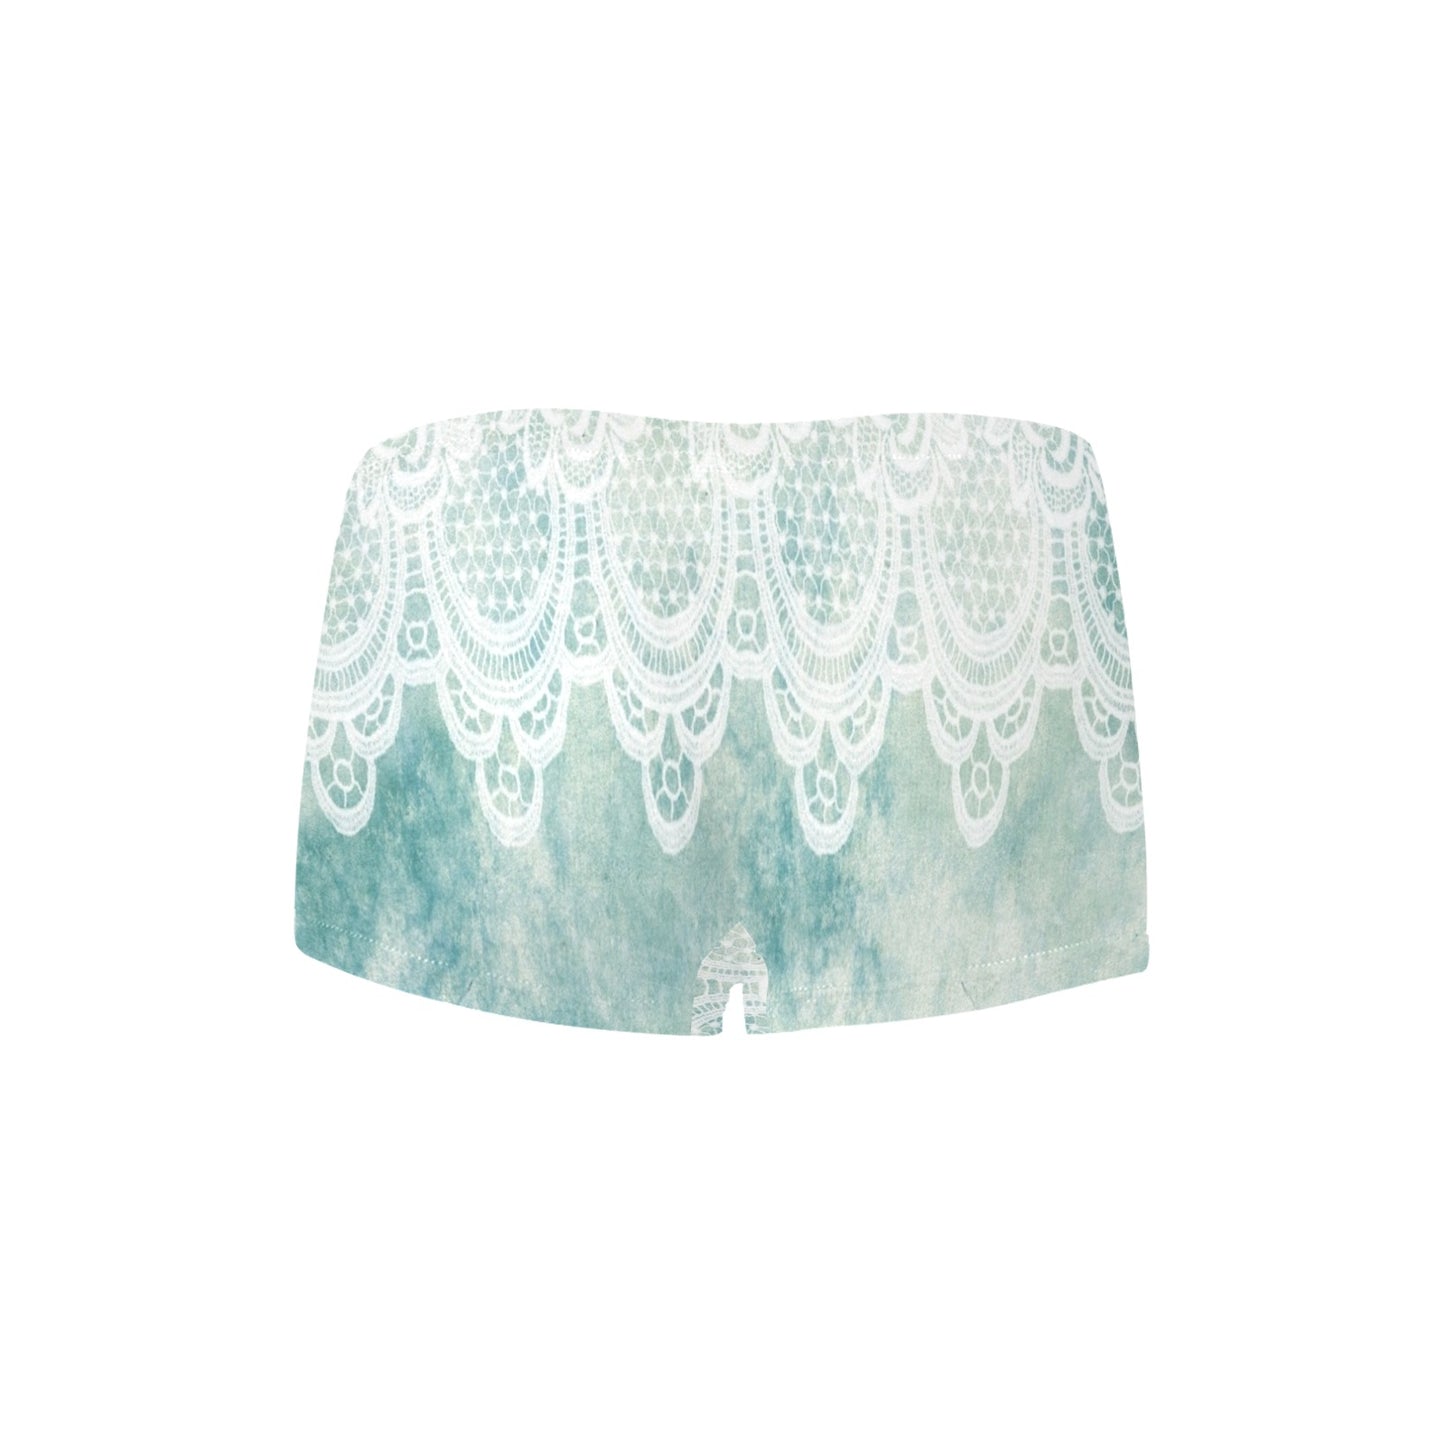 Printed Lace Boyshorts, daisy dukes, pum pum shorts, shortie shorts , design 41